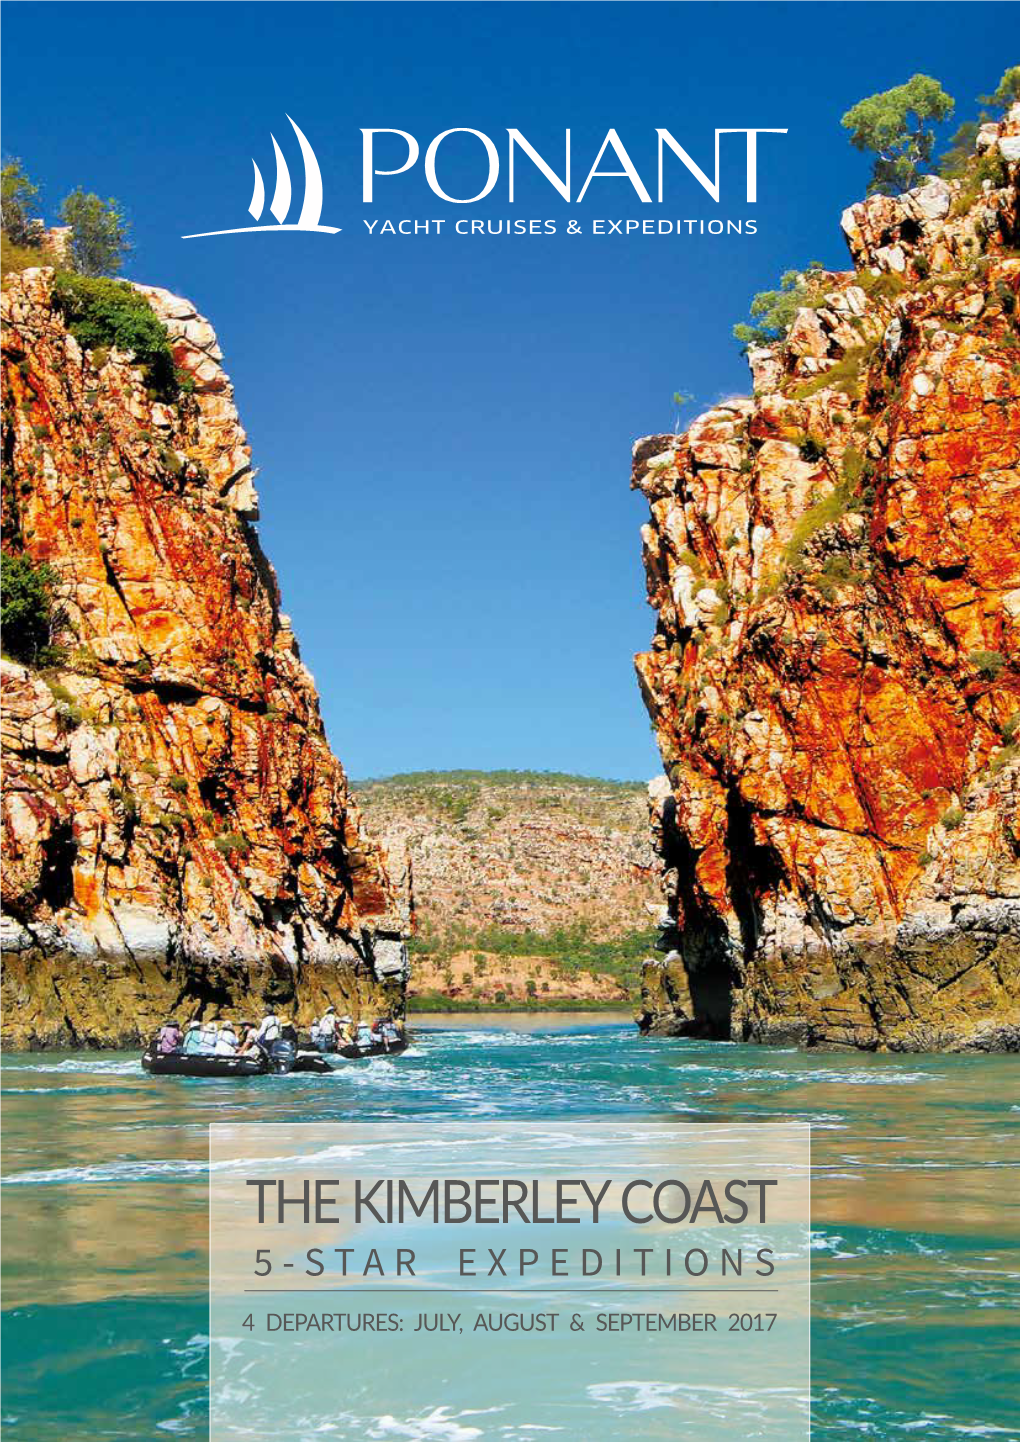 The Kimberley Coast 5-Star Expeditions